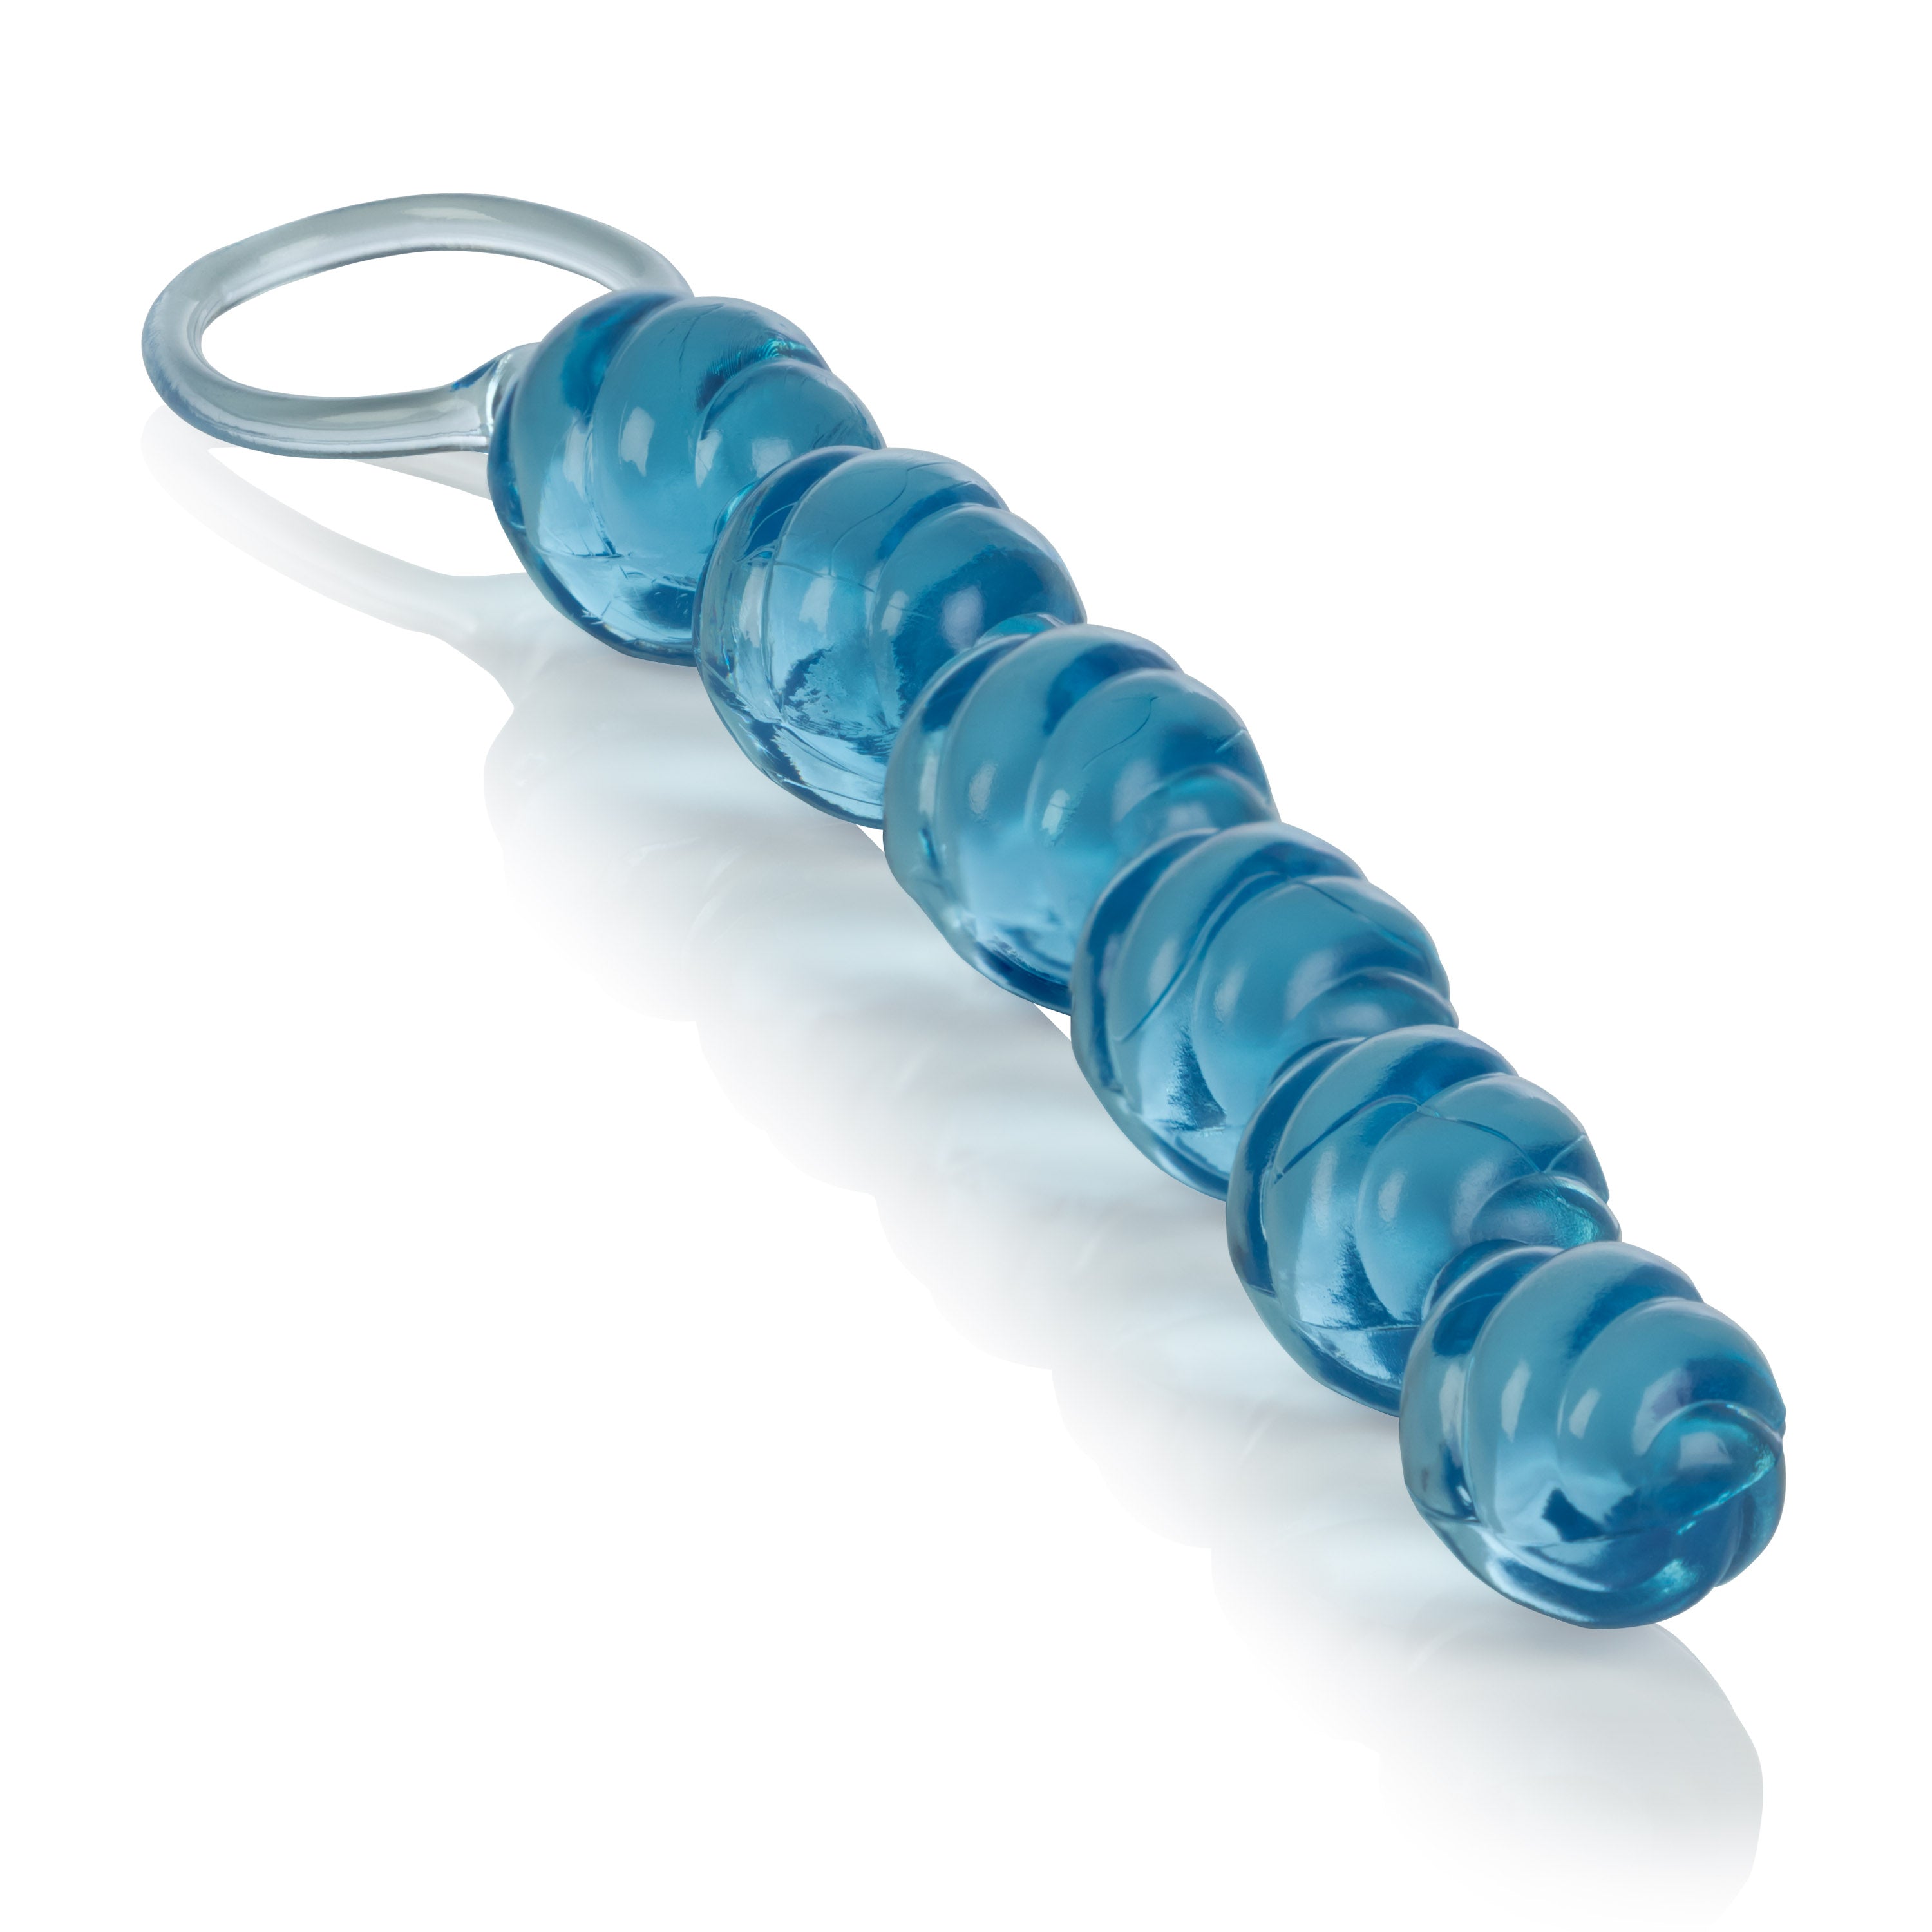 Swirl Pleasure Beads Teal Blue by California Exotic Novelties